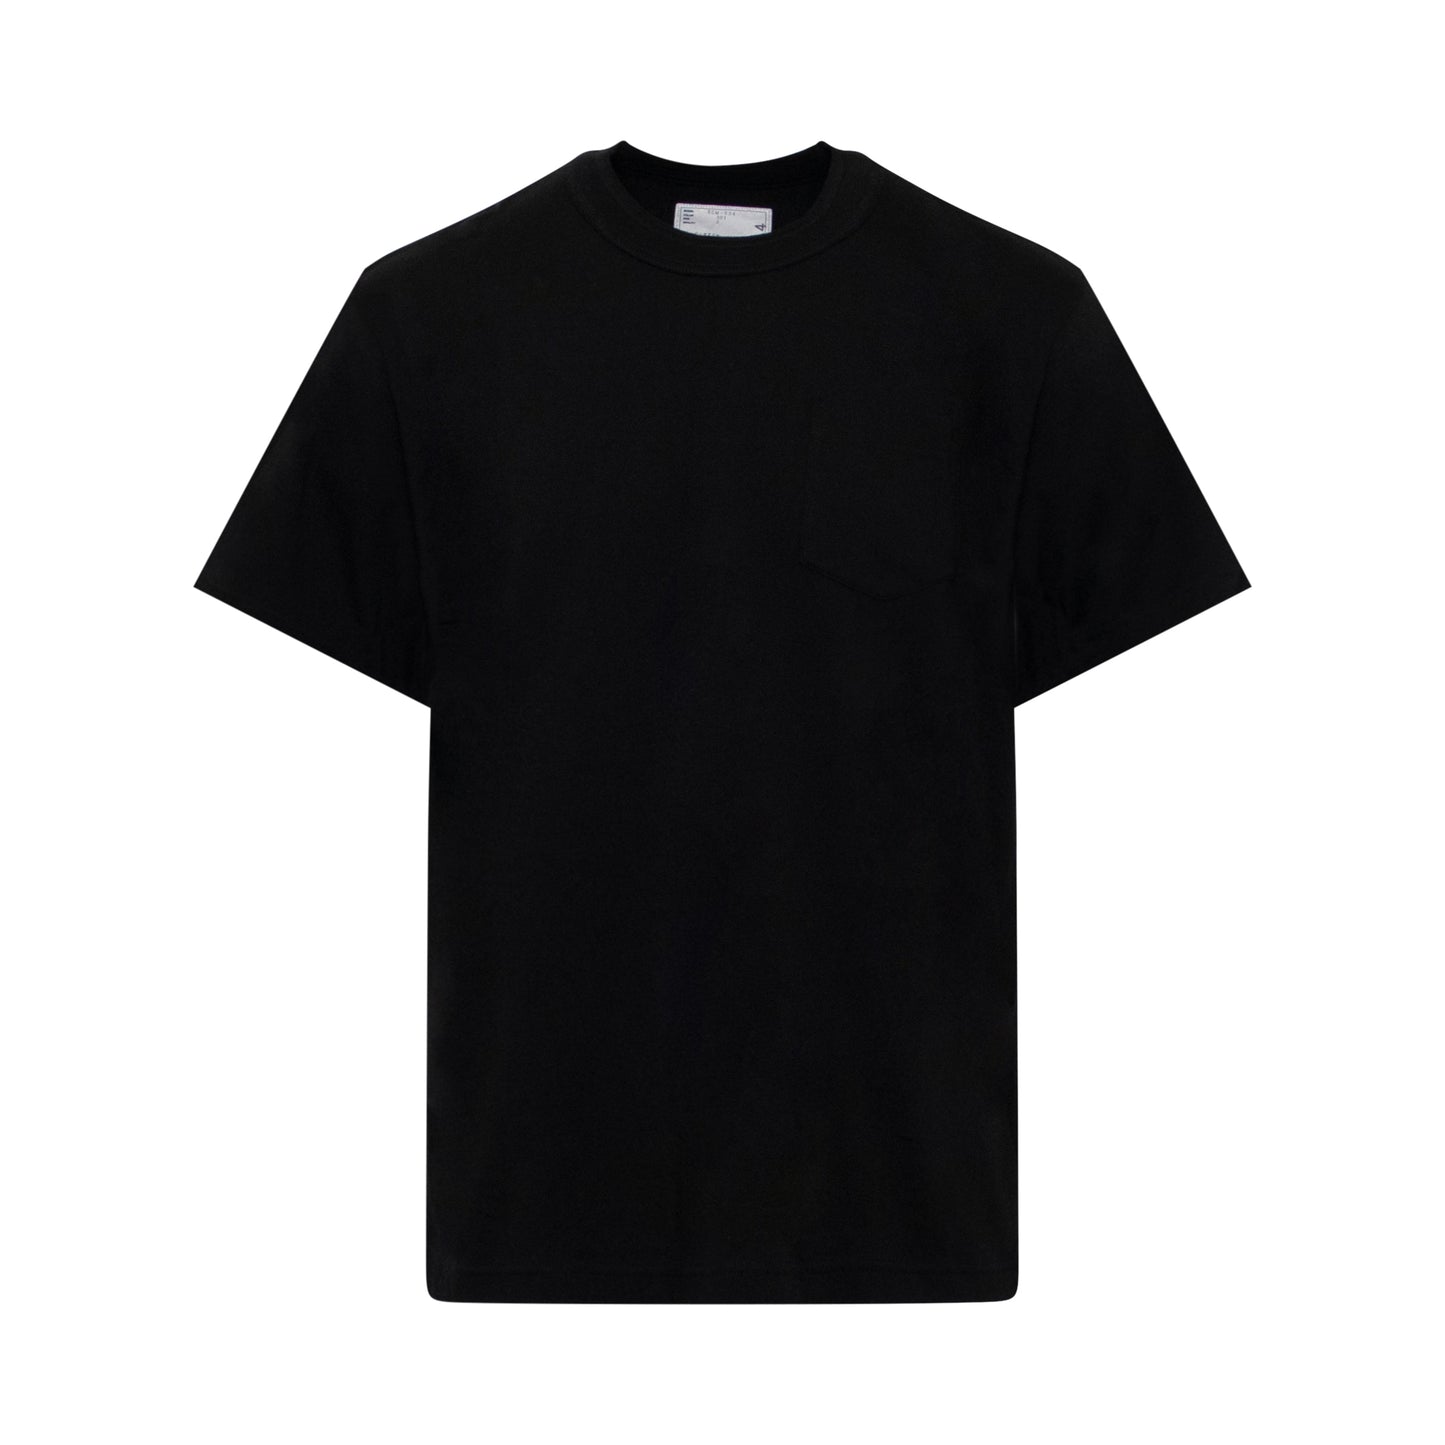 Classic Side Zip T-Shirt in Black